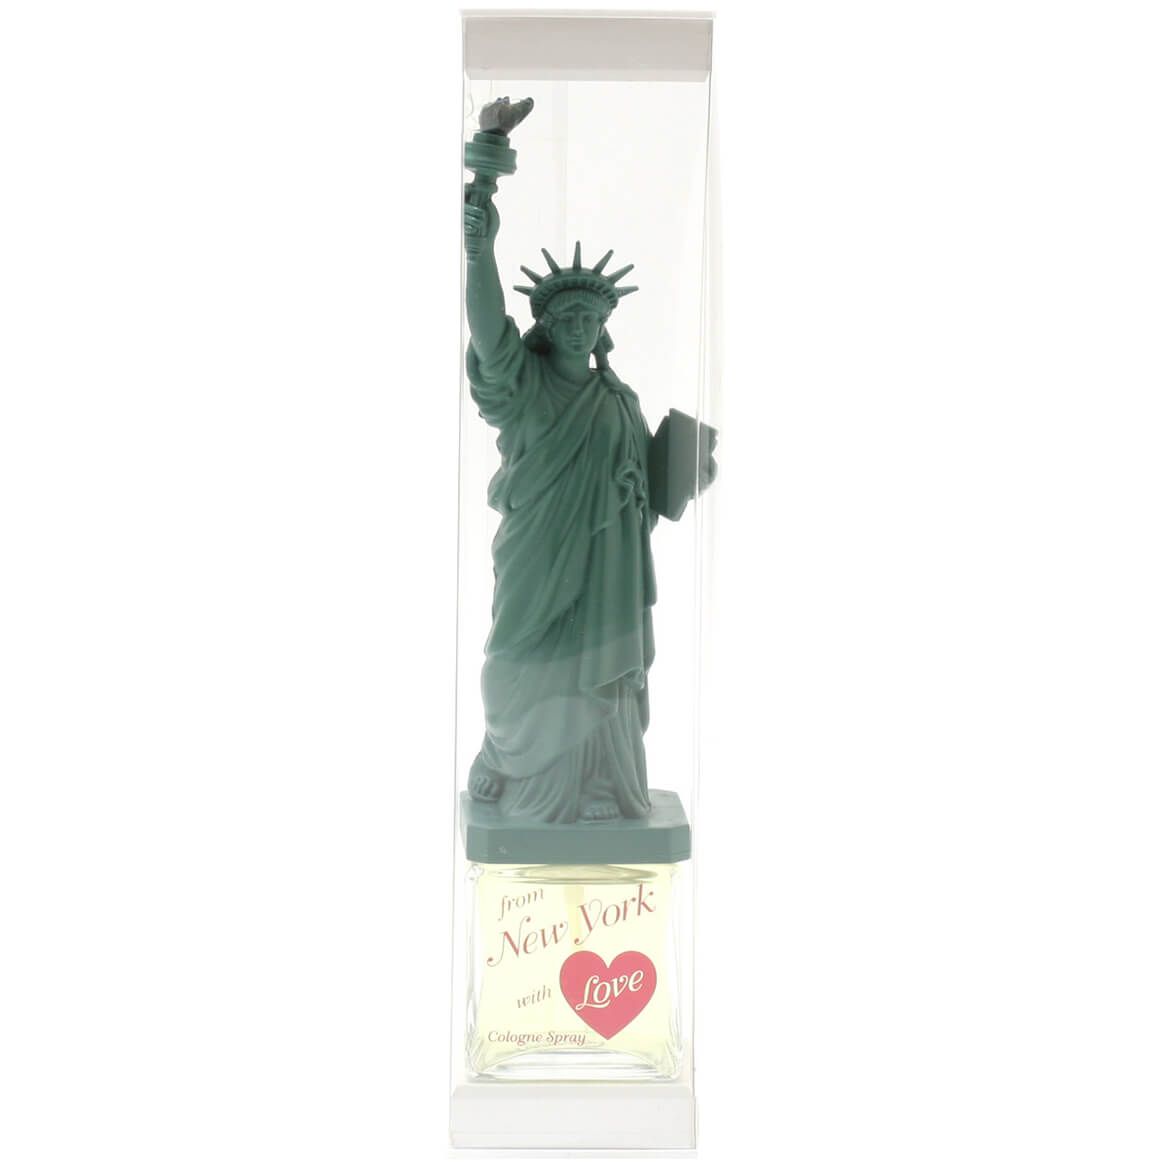 Statue of Liberty Ladies, Cologne Spray 1.7oz + '-' + 360275